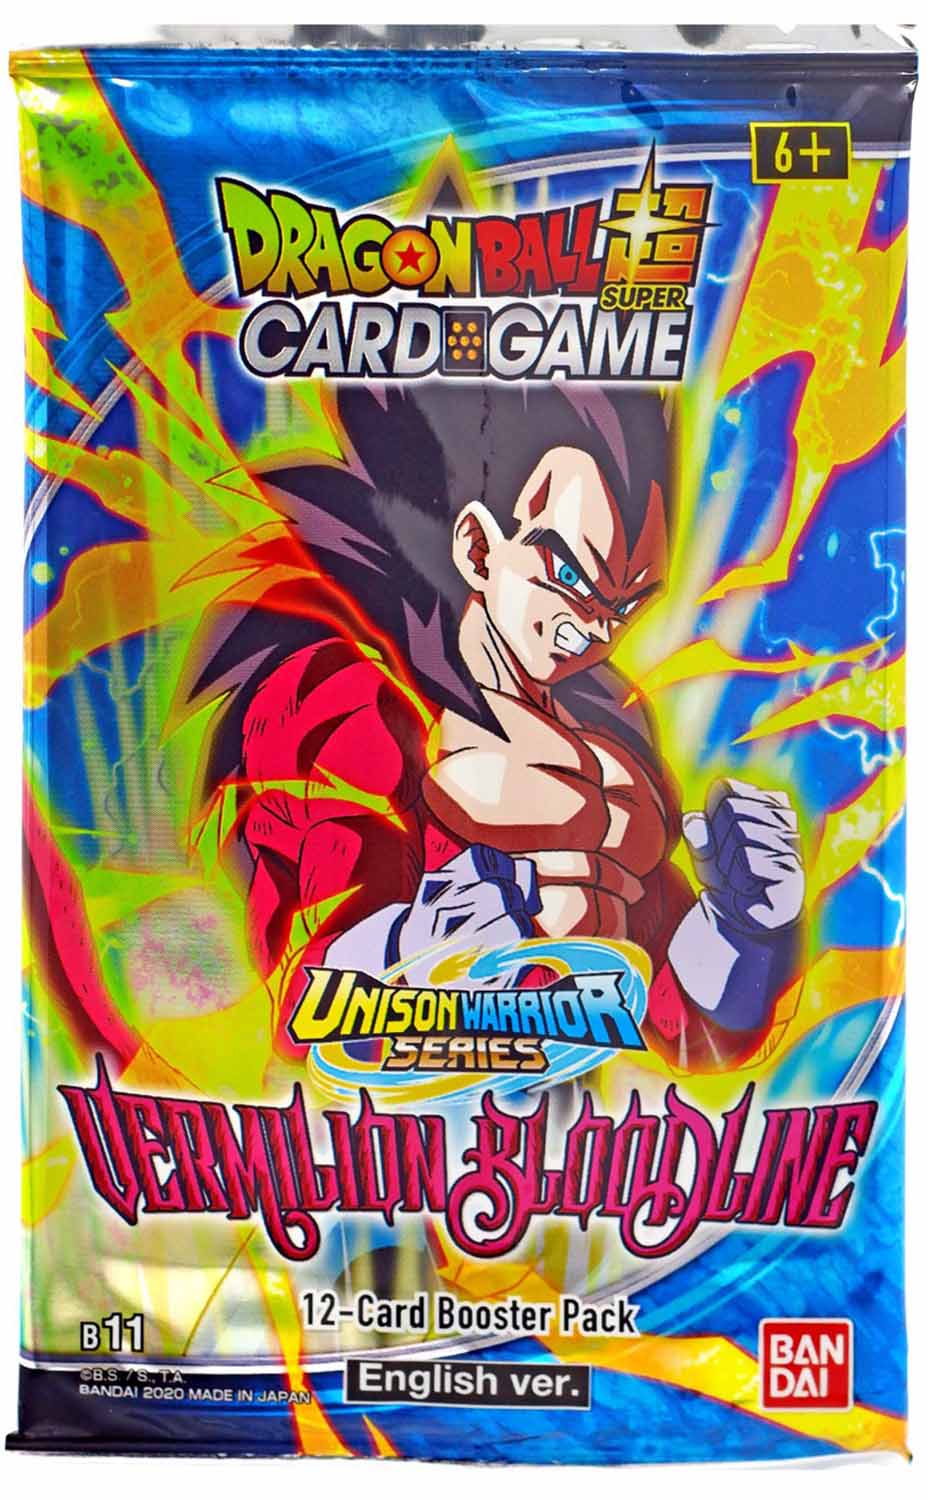 Vermilion Bloodline B11 Booster Display - Dragon Ball Super Card Game - EN